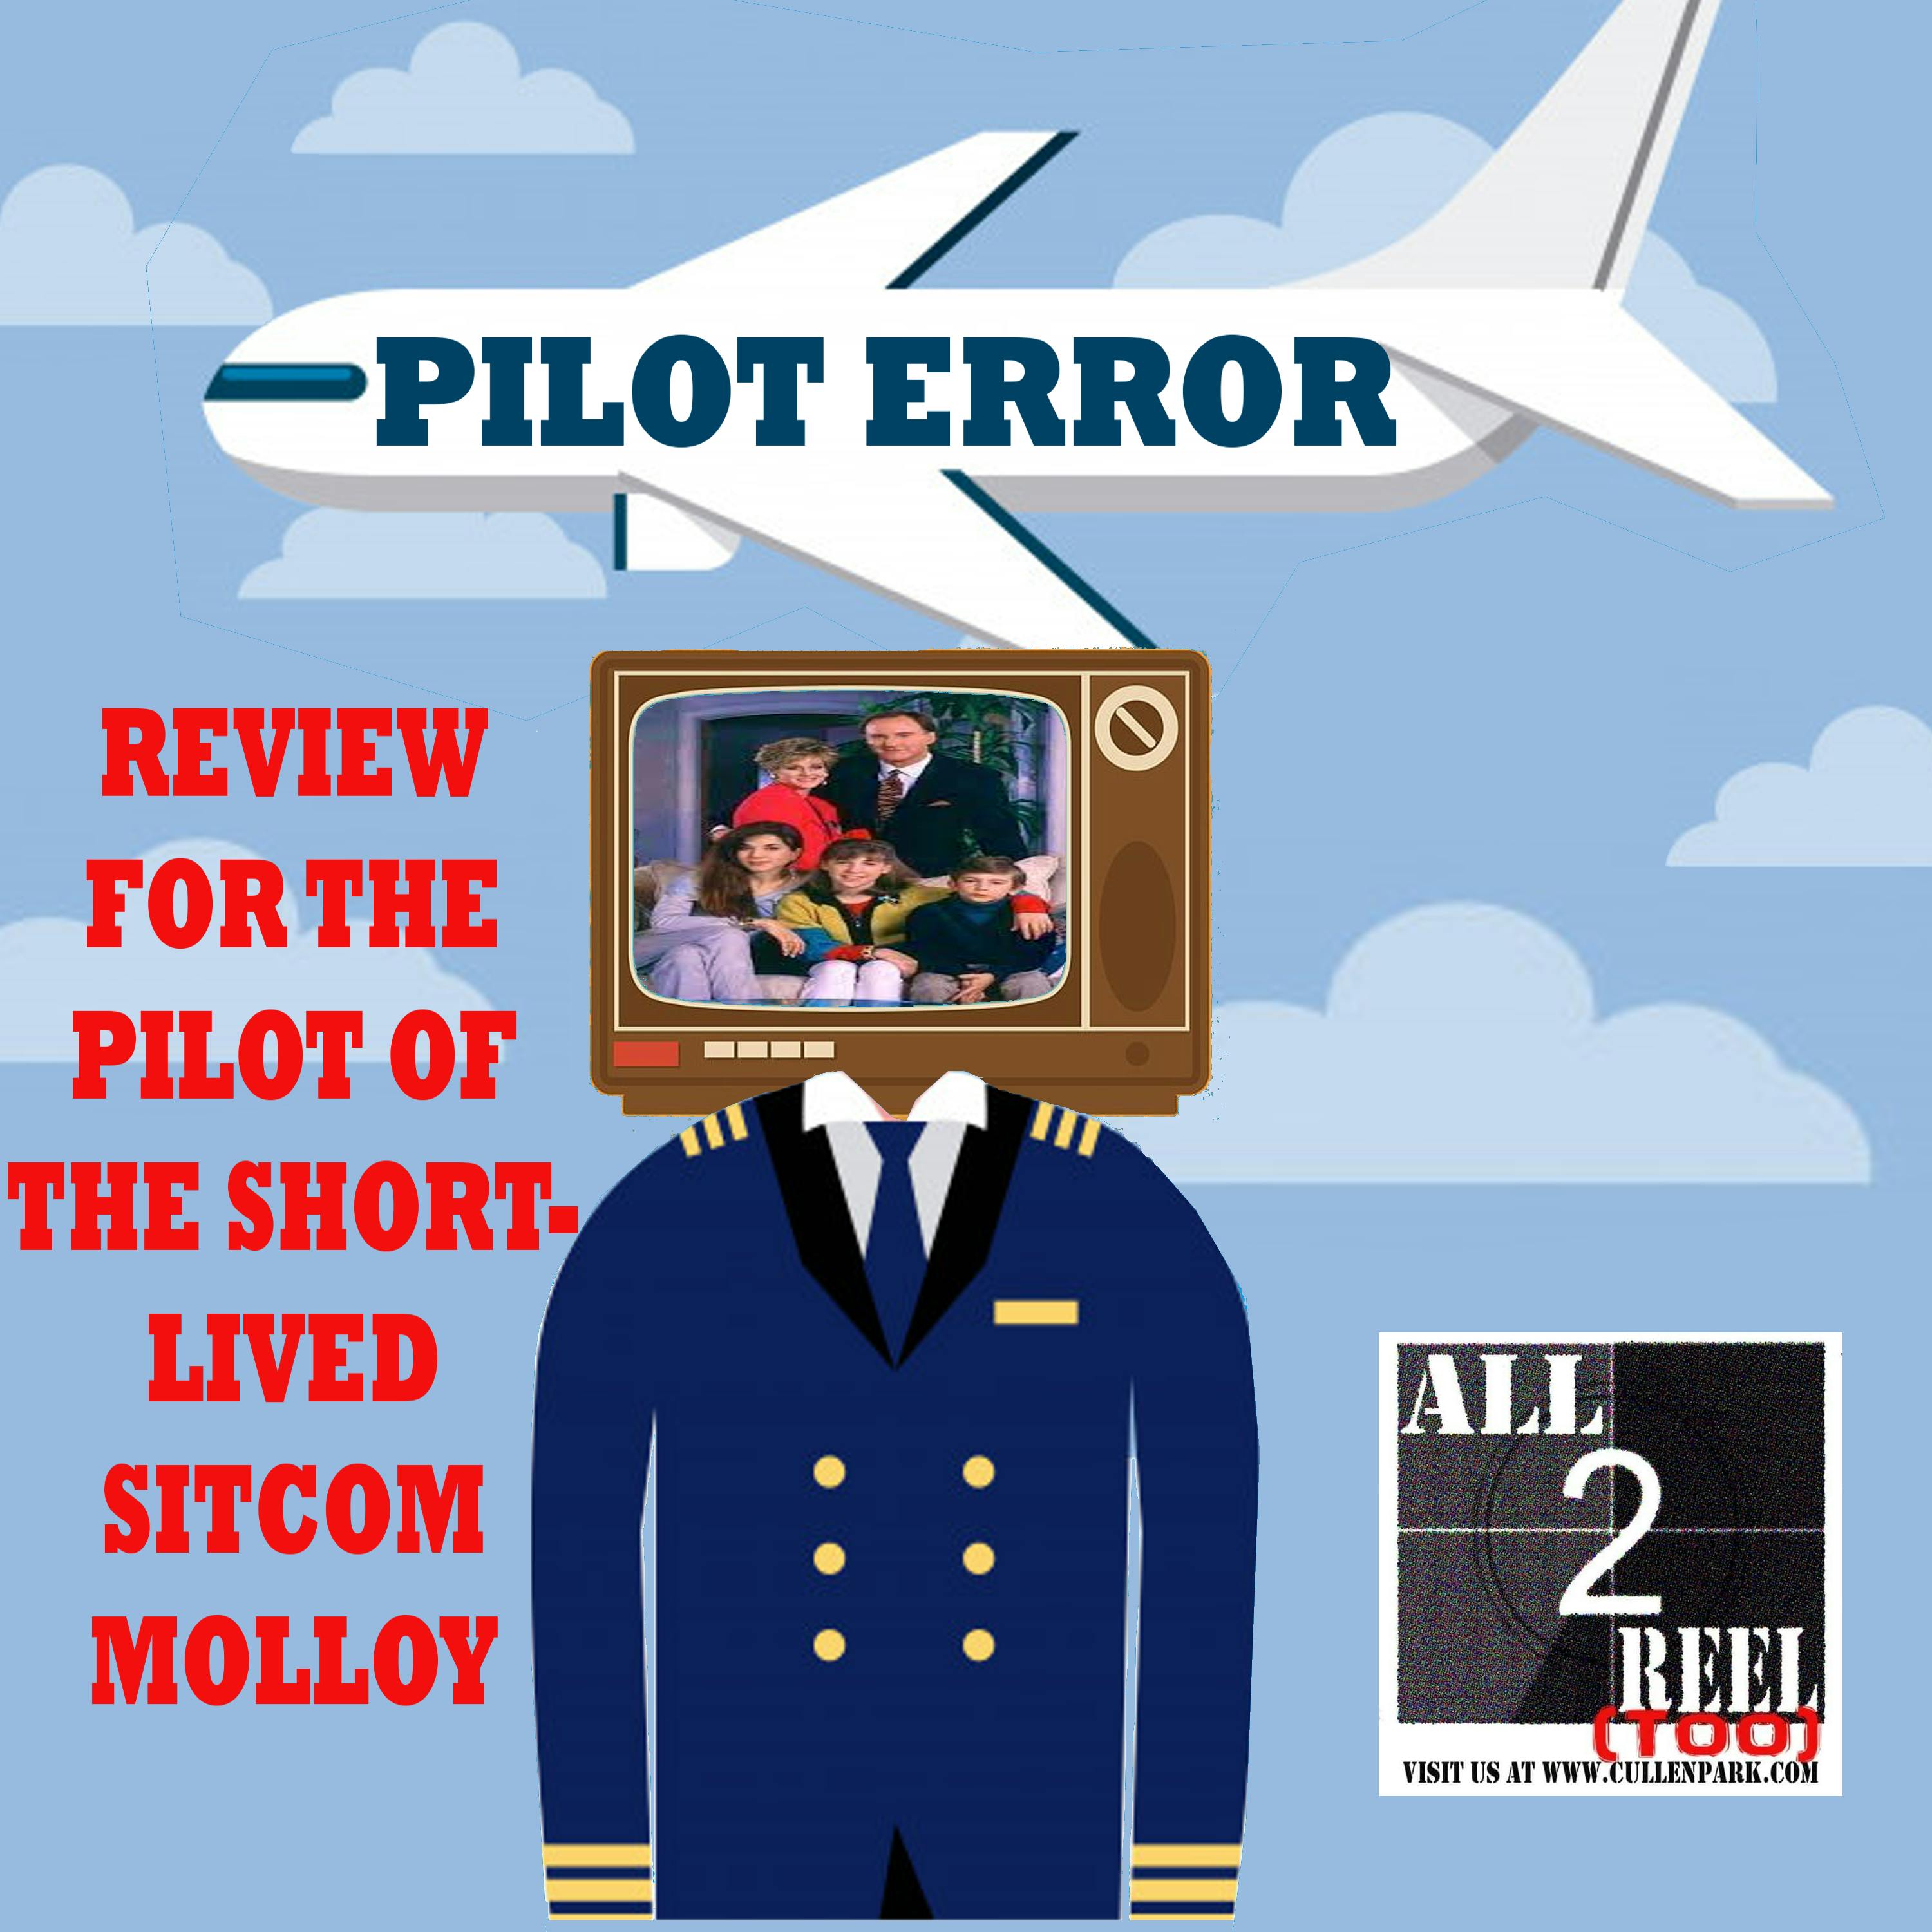 Molloy (1990) - PILOT ERROR TV REVIEW Image